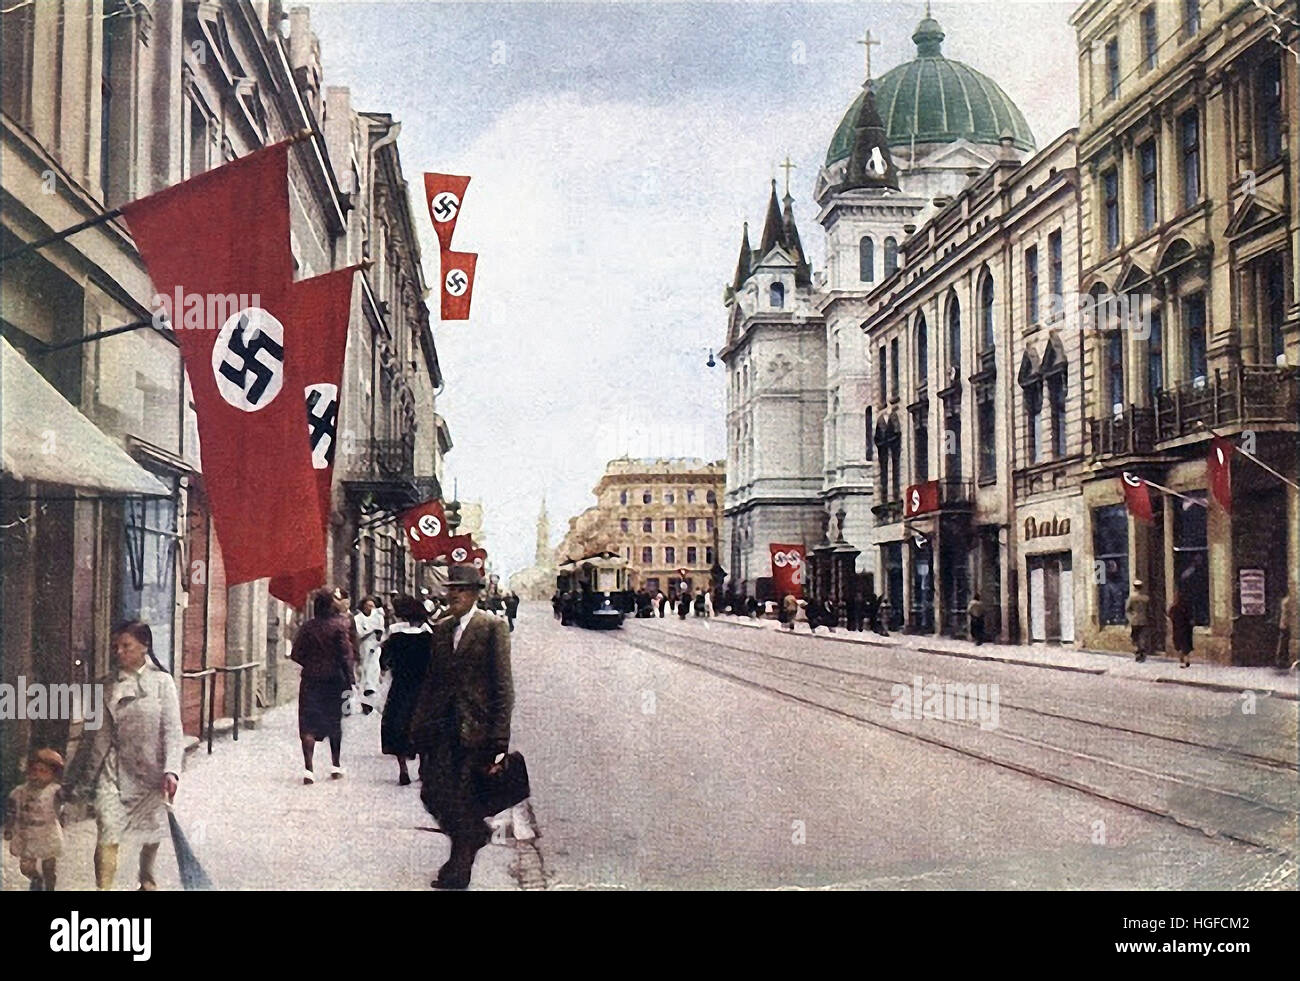 Ghetto Lodz, Litzmannstadt, Nazi flags in the Old Town of Lodz near the Catholic Church Of Pentecost, Poland 1942, World War II, Stock Photo